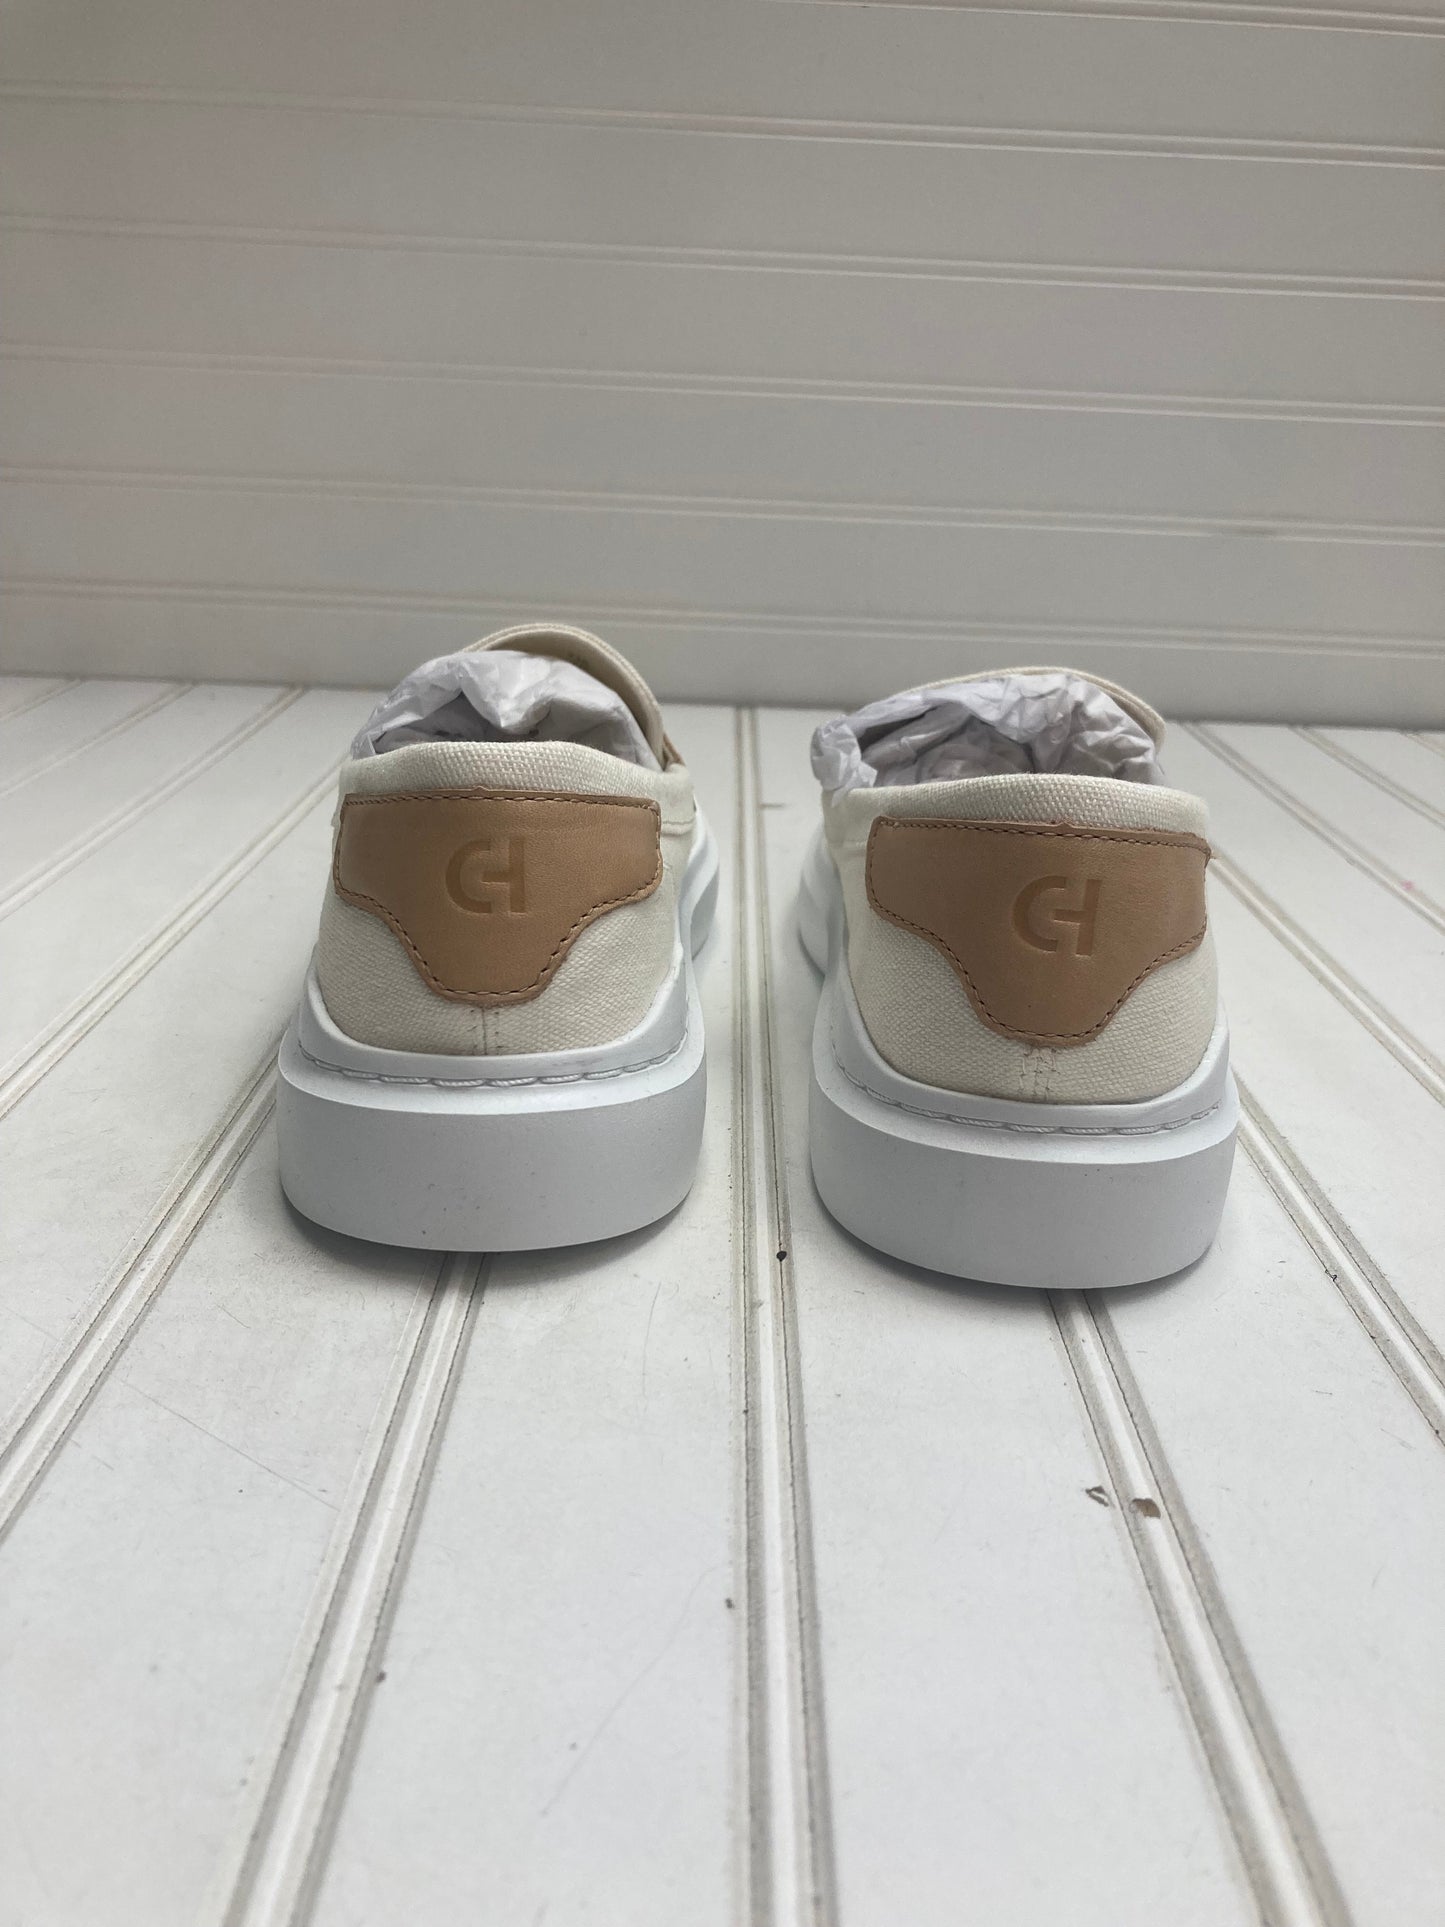 Tan & White Shoes Designer Cole-haan, Size 7.5